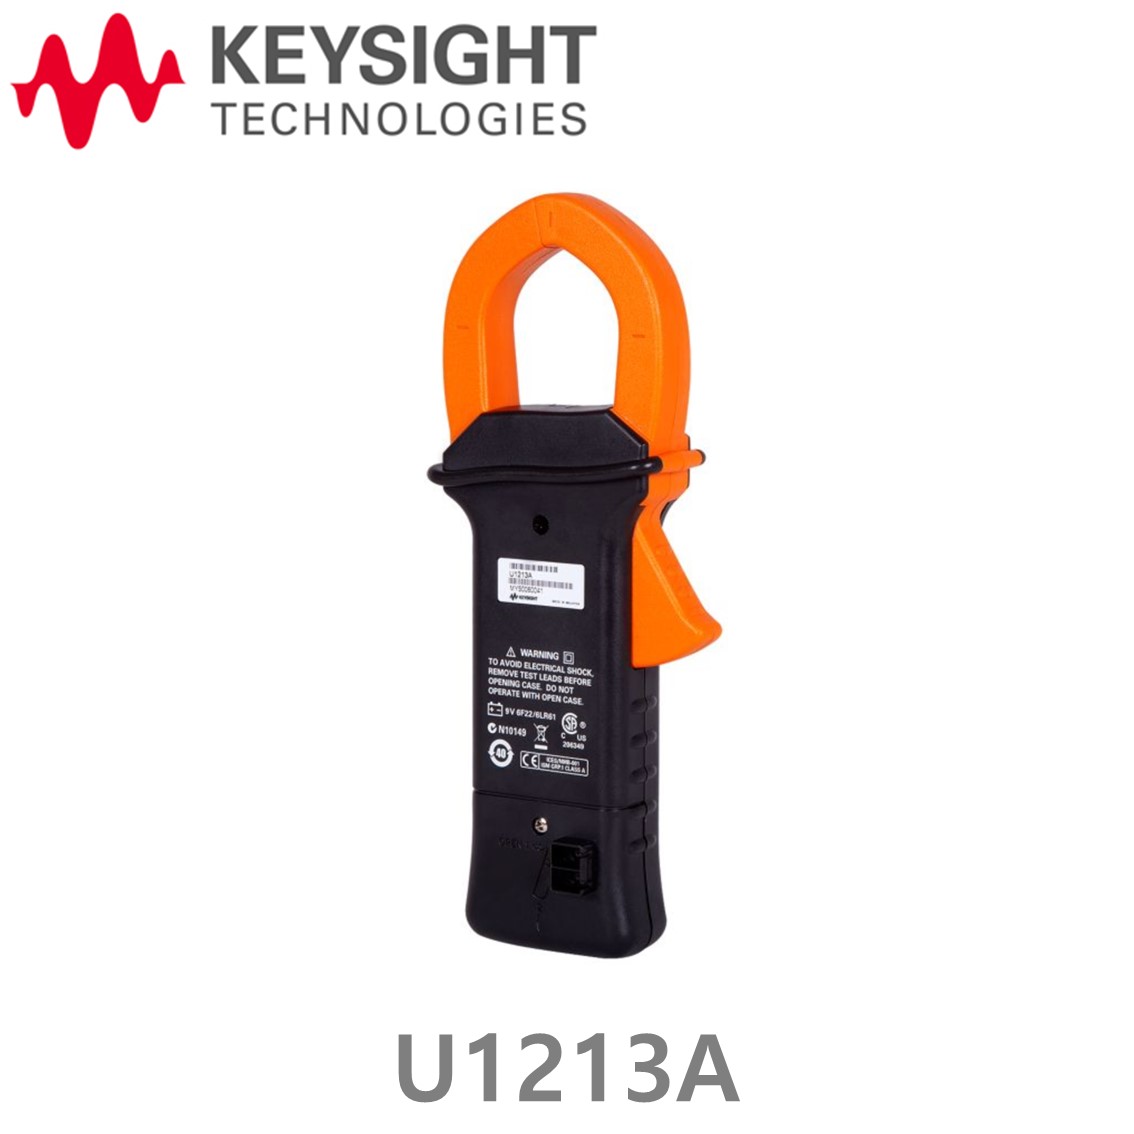 [ KEYSIGHT U1213A ] 키사이트 AC/DC 1000A 핸드형 클램프미터, 3.5디지트